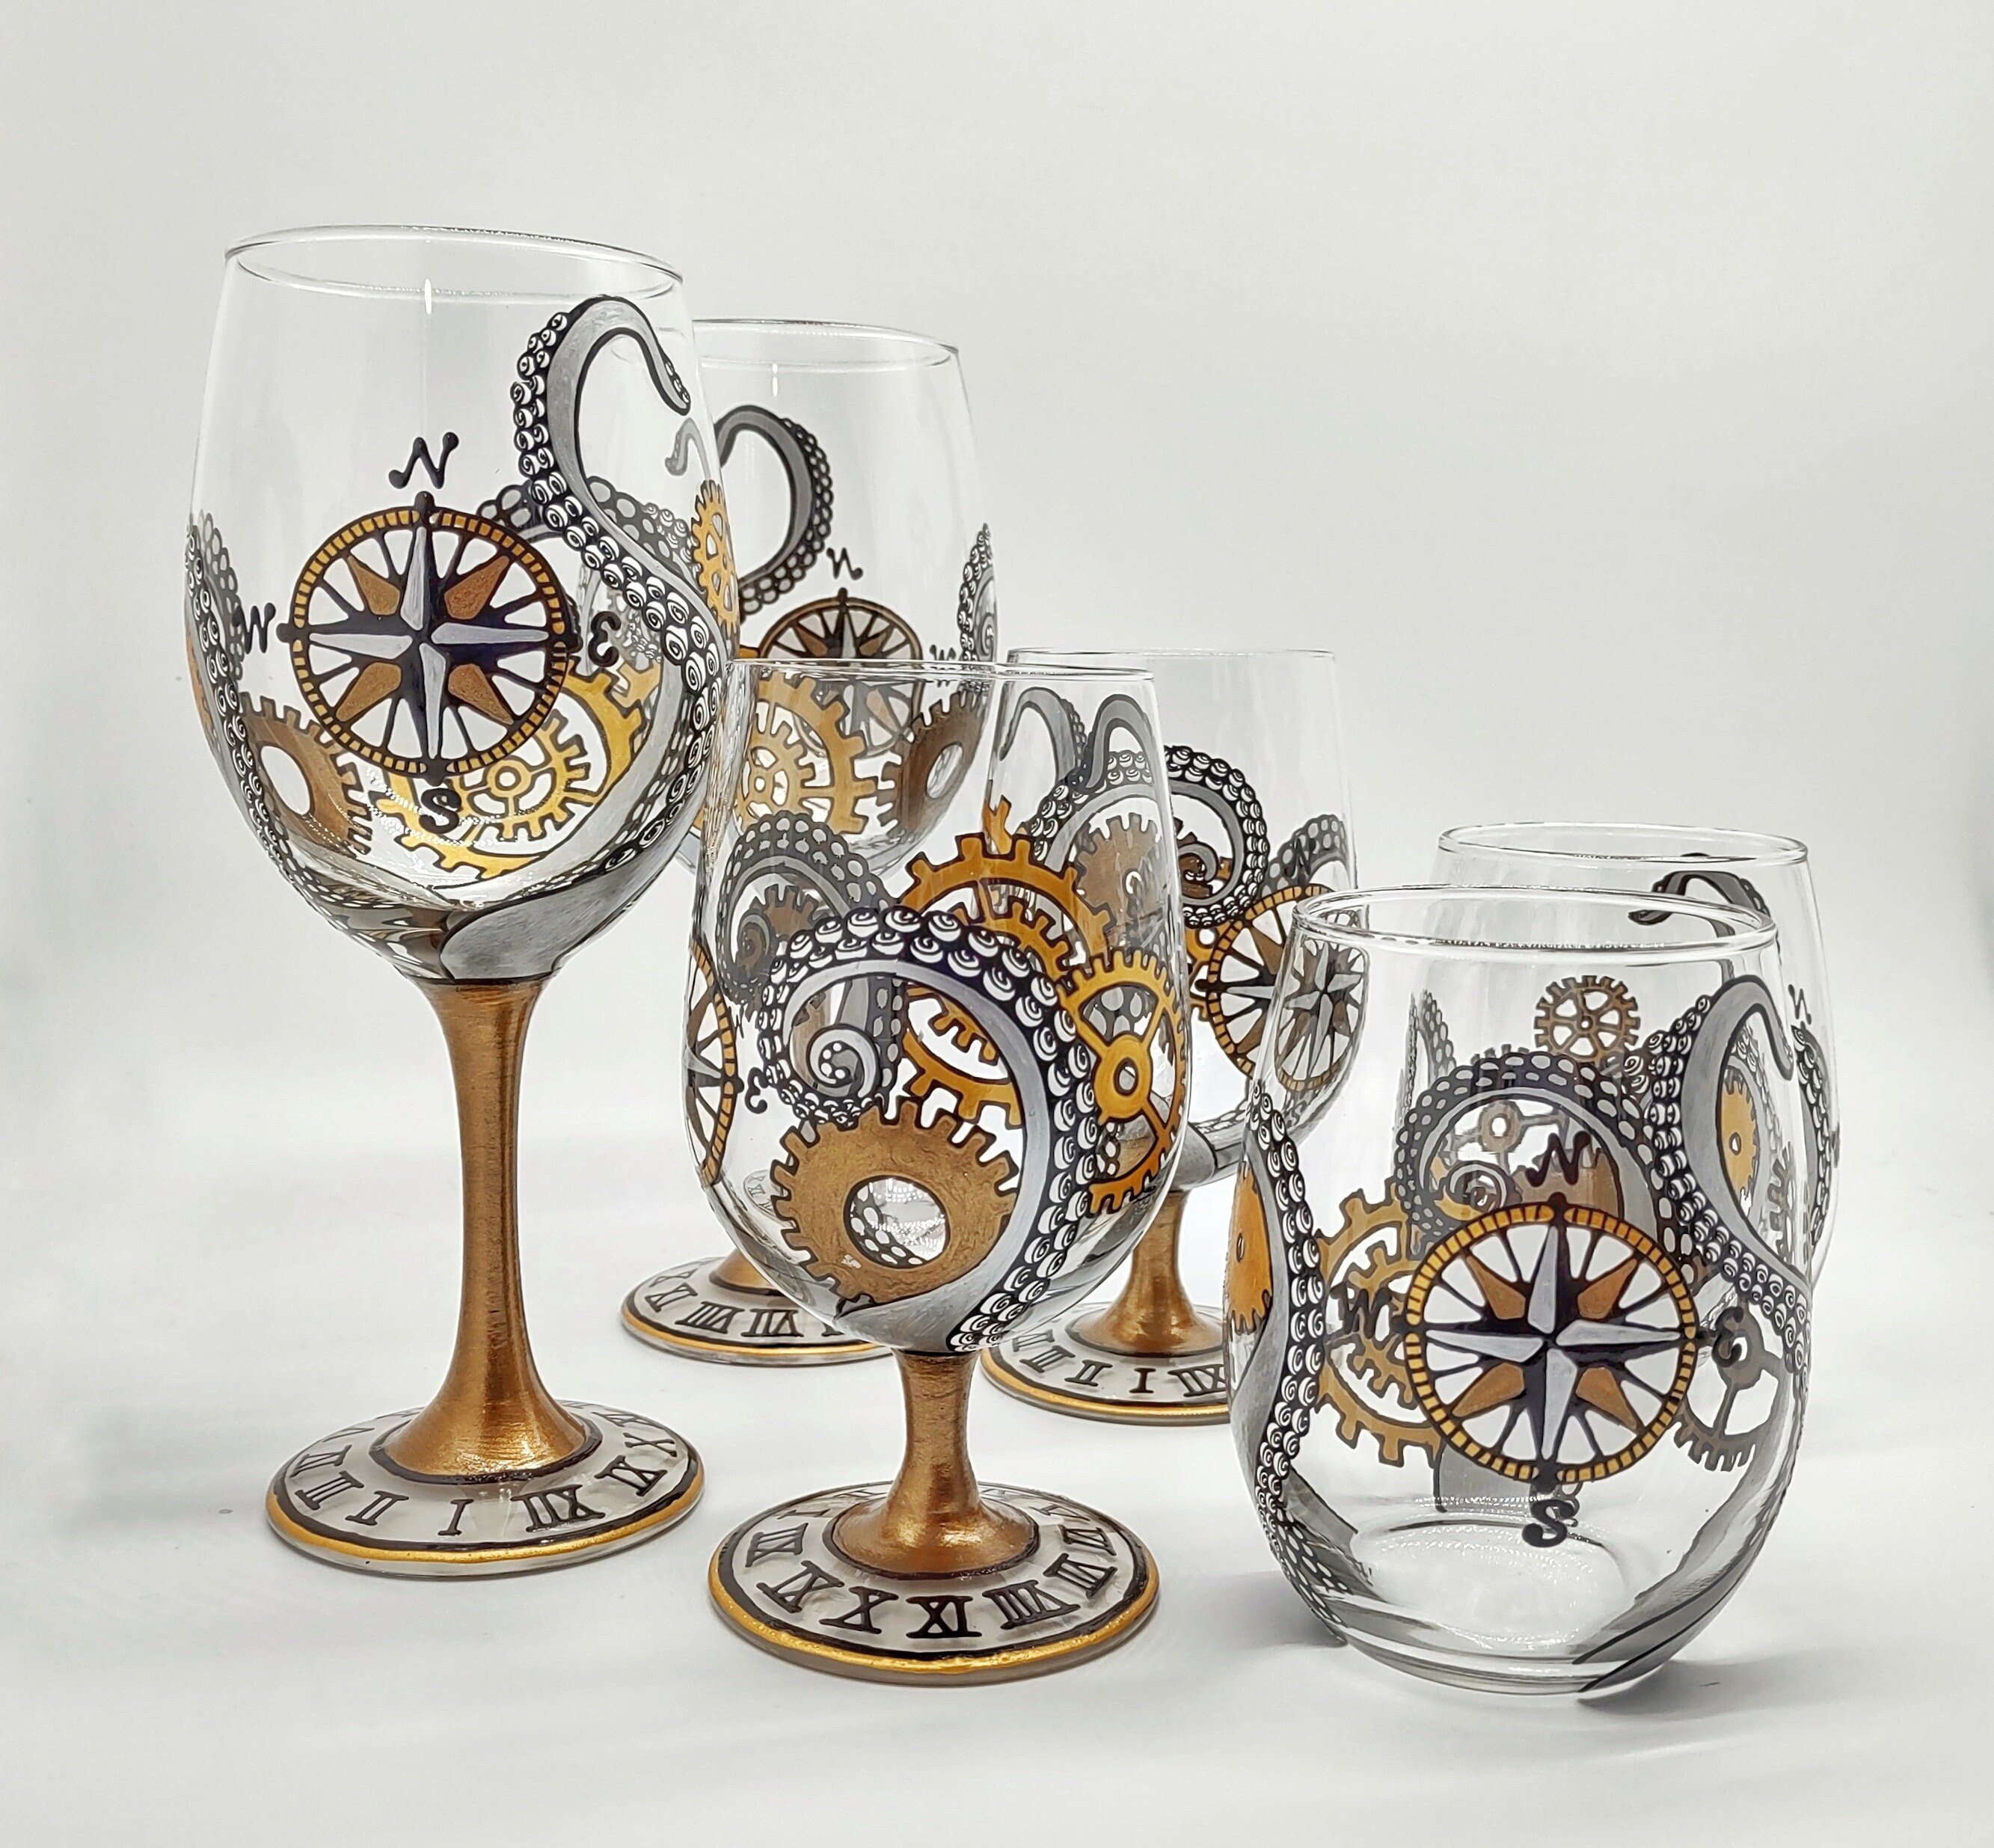 Libbey Craft Spirits 6-Piece Assorted Drinkware Glass Set, Clear